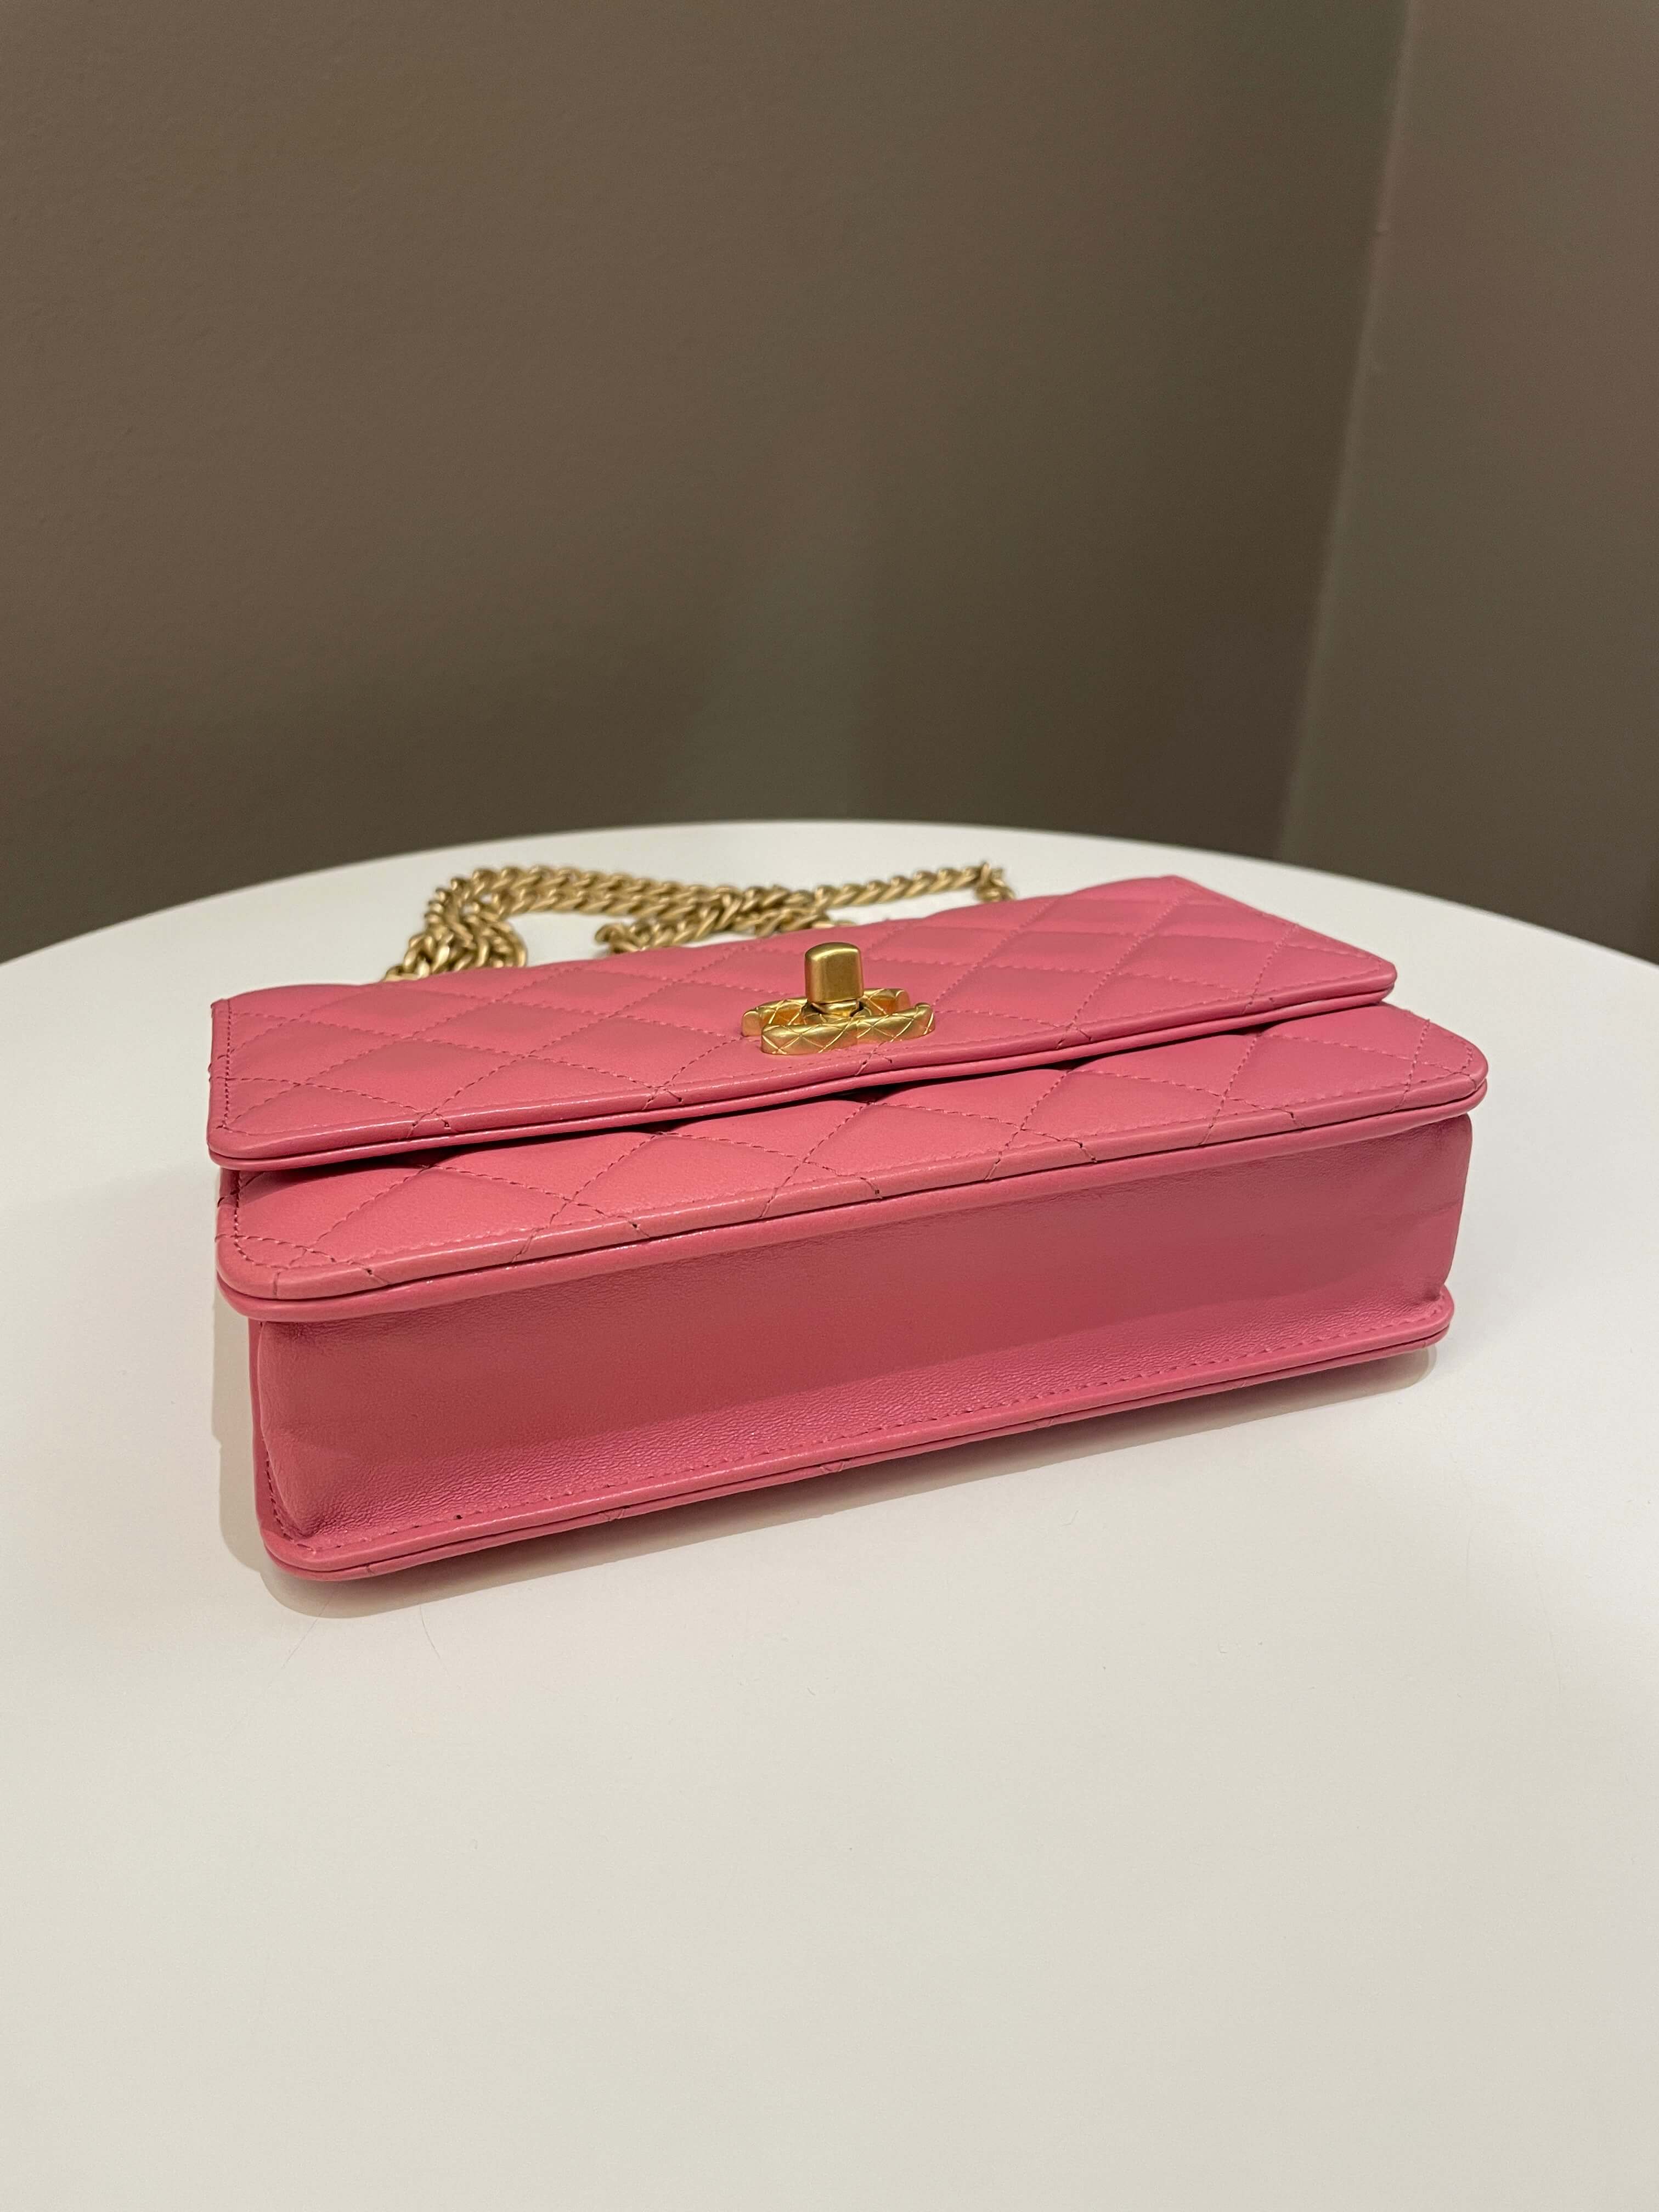 Chanel 23B Pearl Crush Wallet On Chain
Pink Lambskin